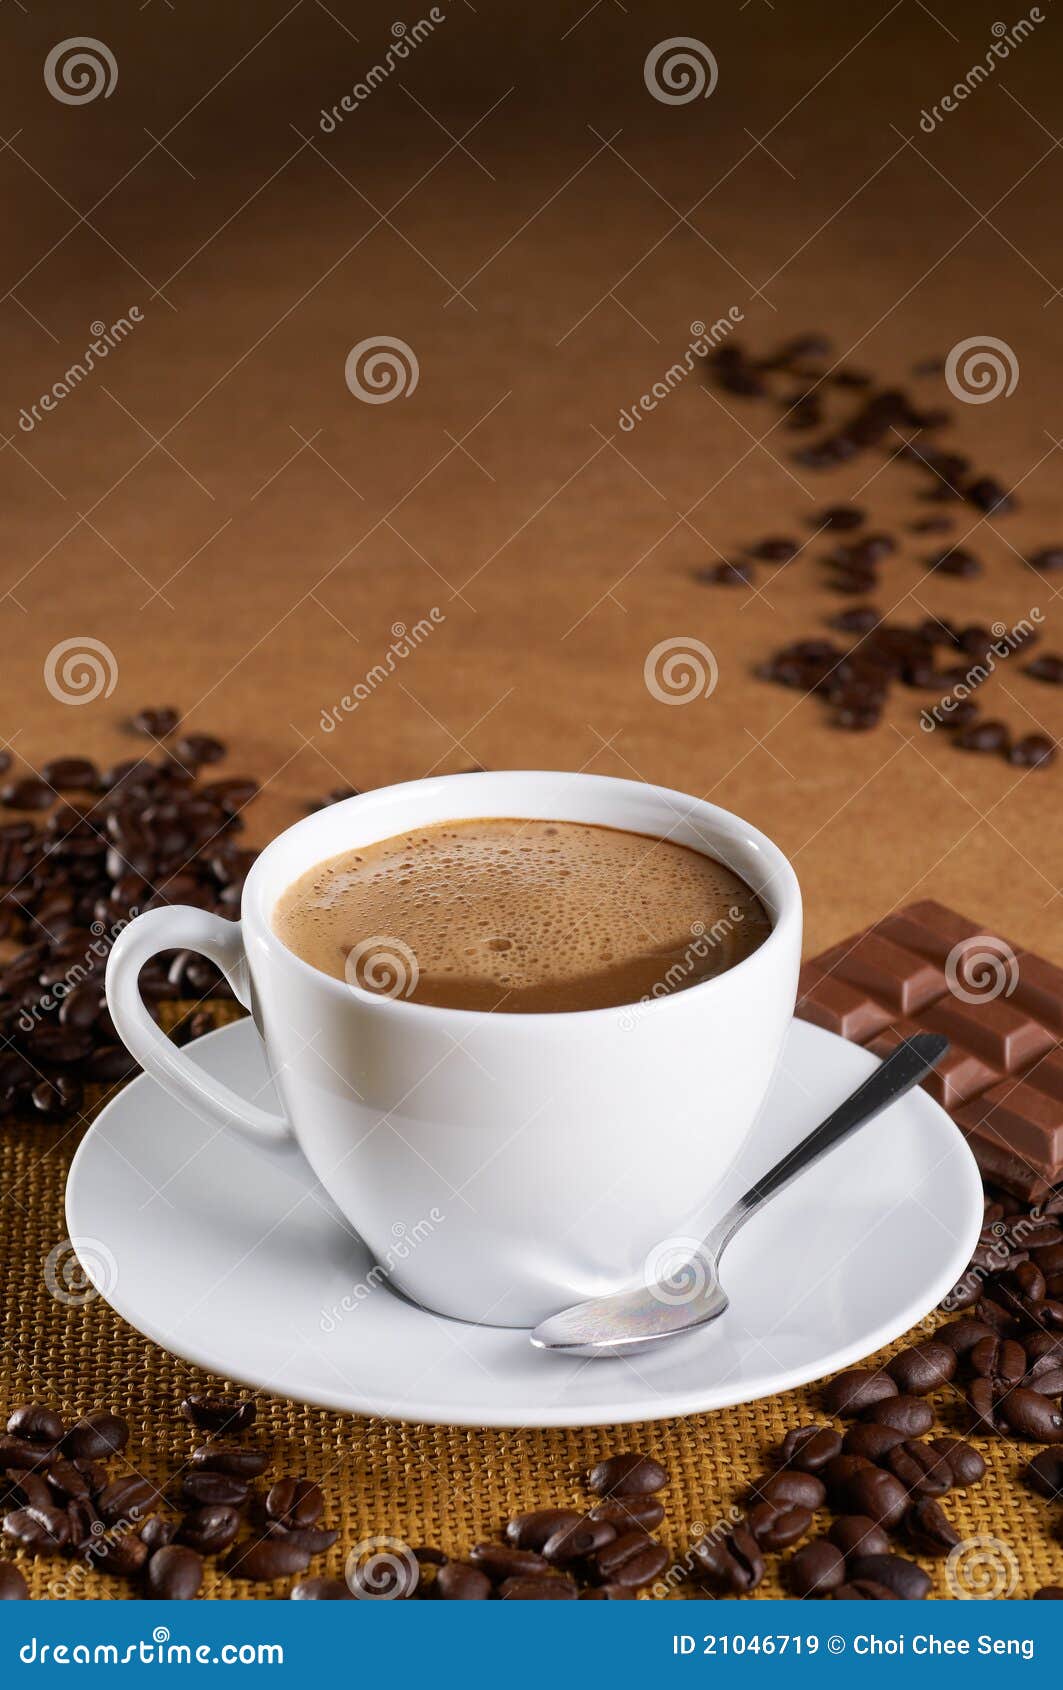 mocha coffee